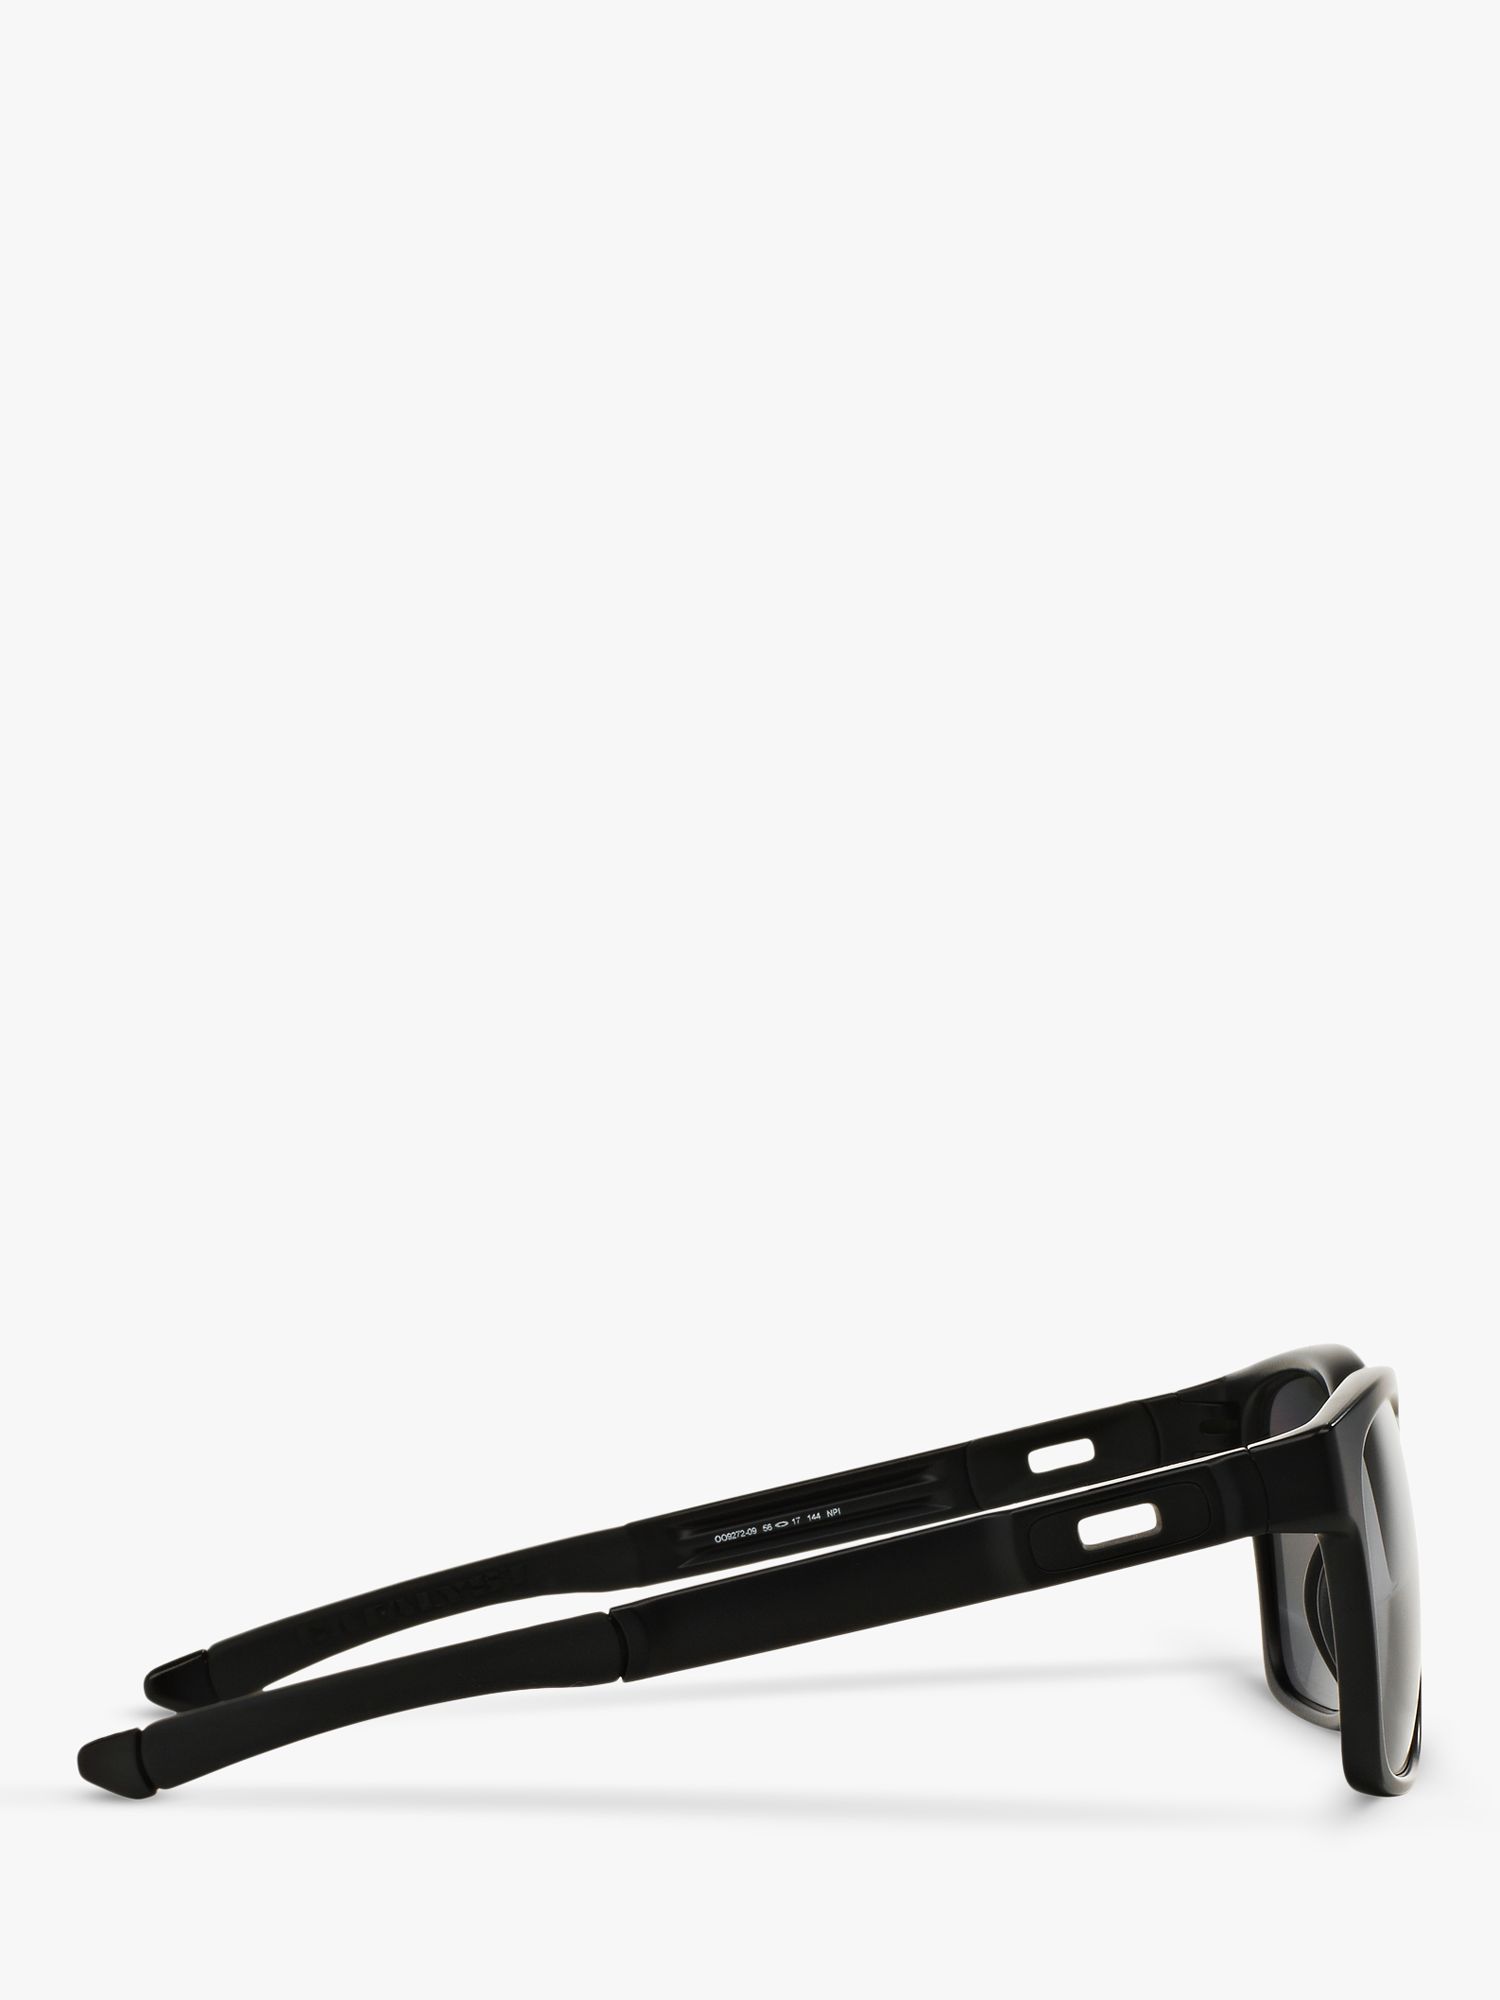 Oakley OO9272 Men's Catalyst Polarised Rectangular Sunglasses, Matte Black/Gradient